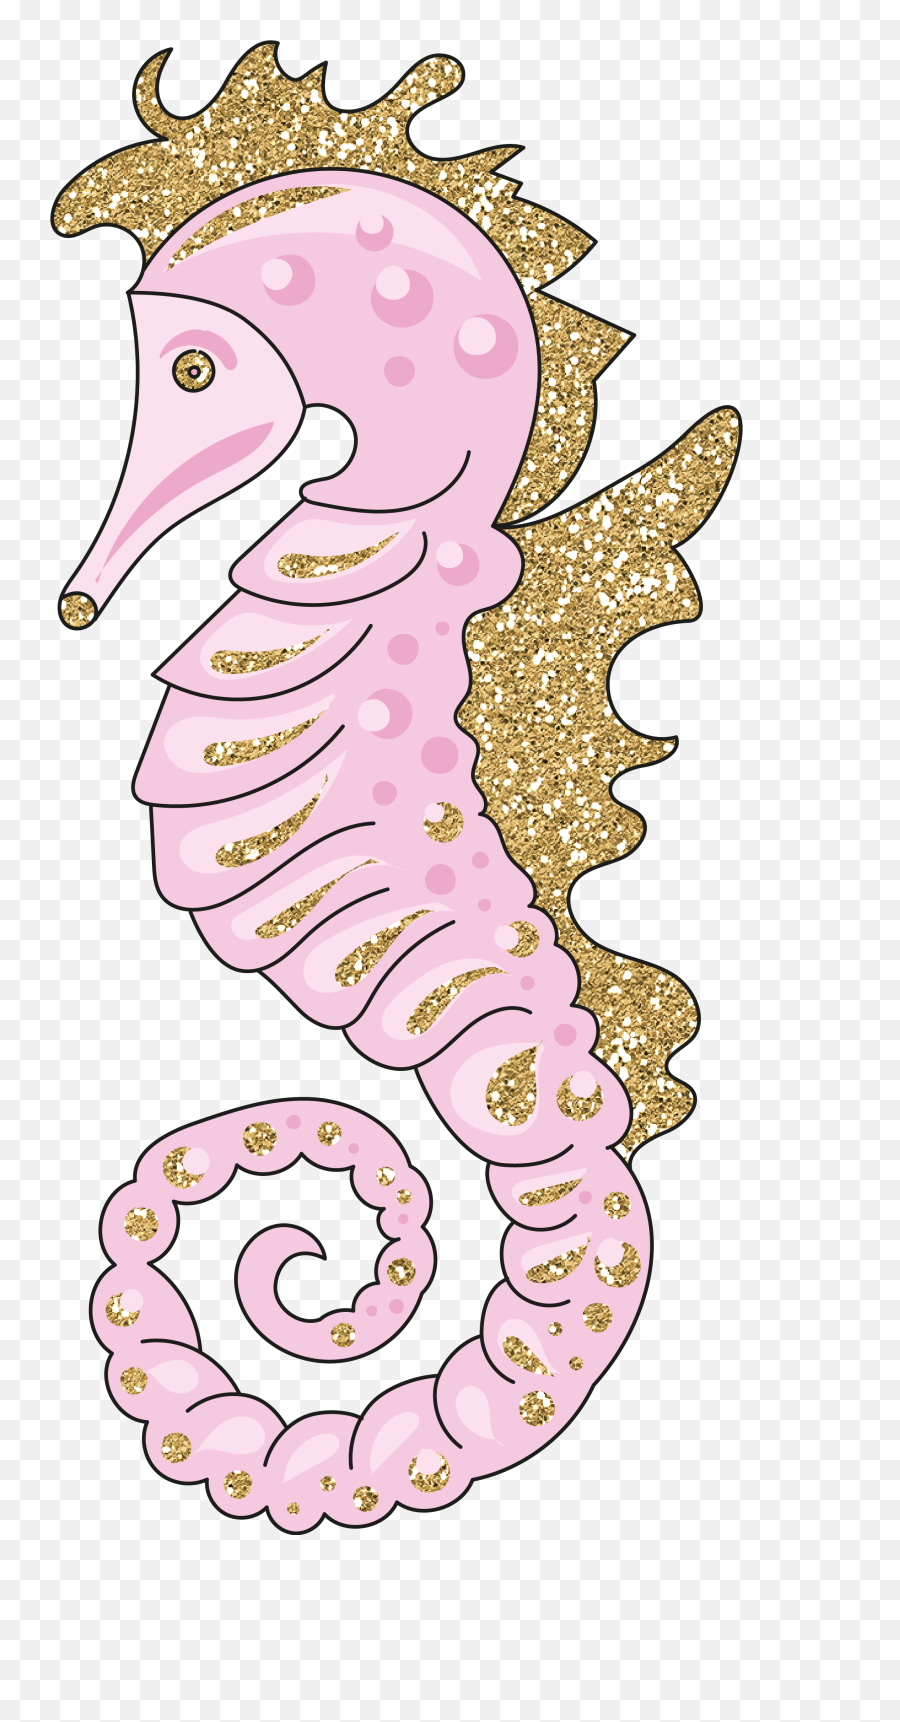 The Most Edited Seahorse Picsart - Girly Emoji,Facebook Emoticons Seahorse